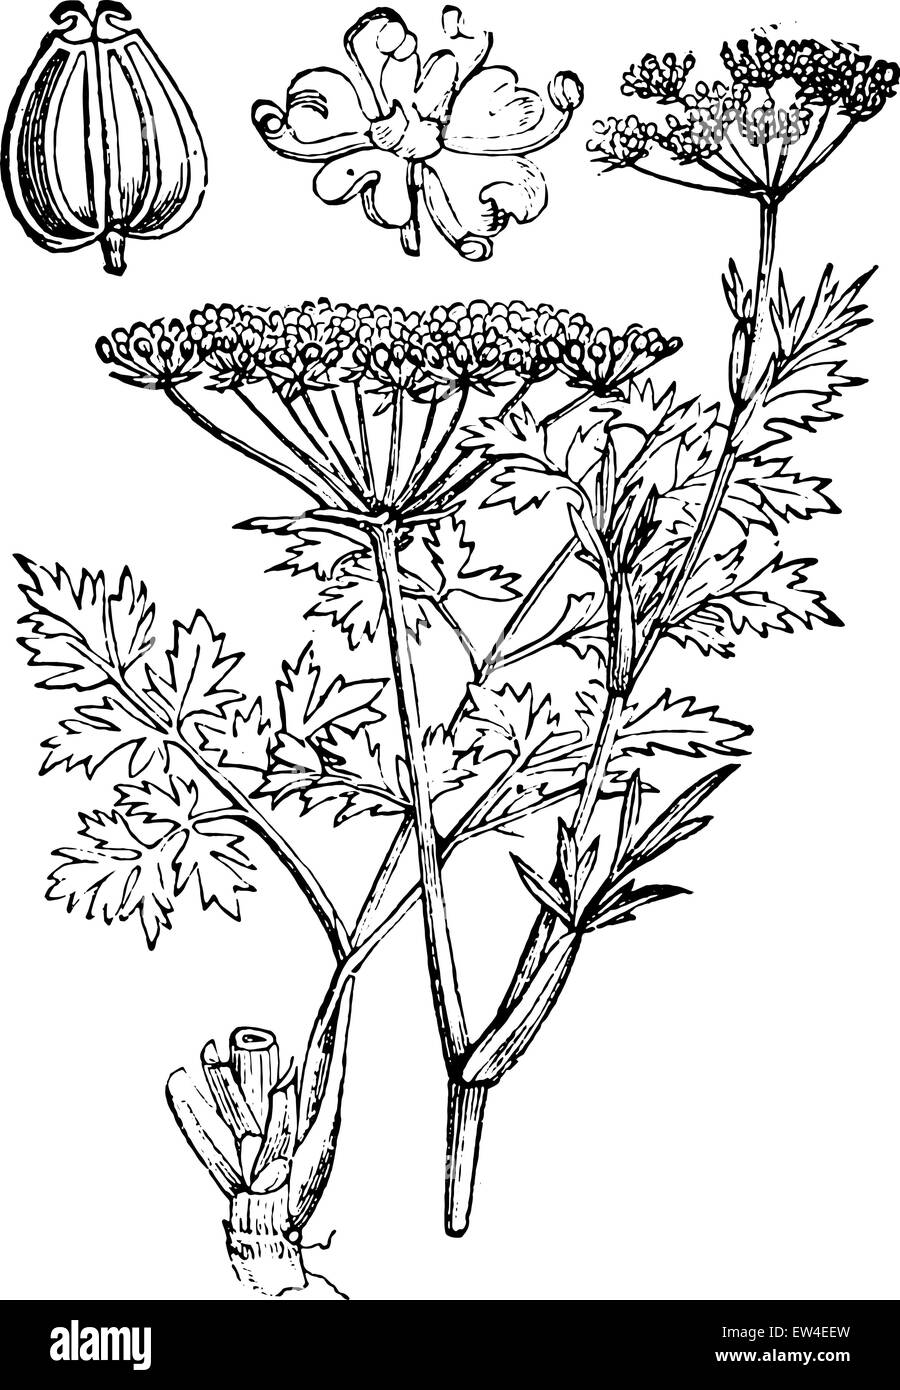 Parsley or garden parsley, vintage engraved illustration. La Vie dans la nature, 1890. Stock Vector